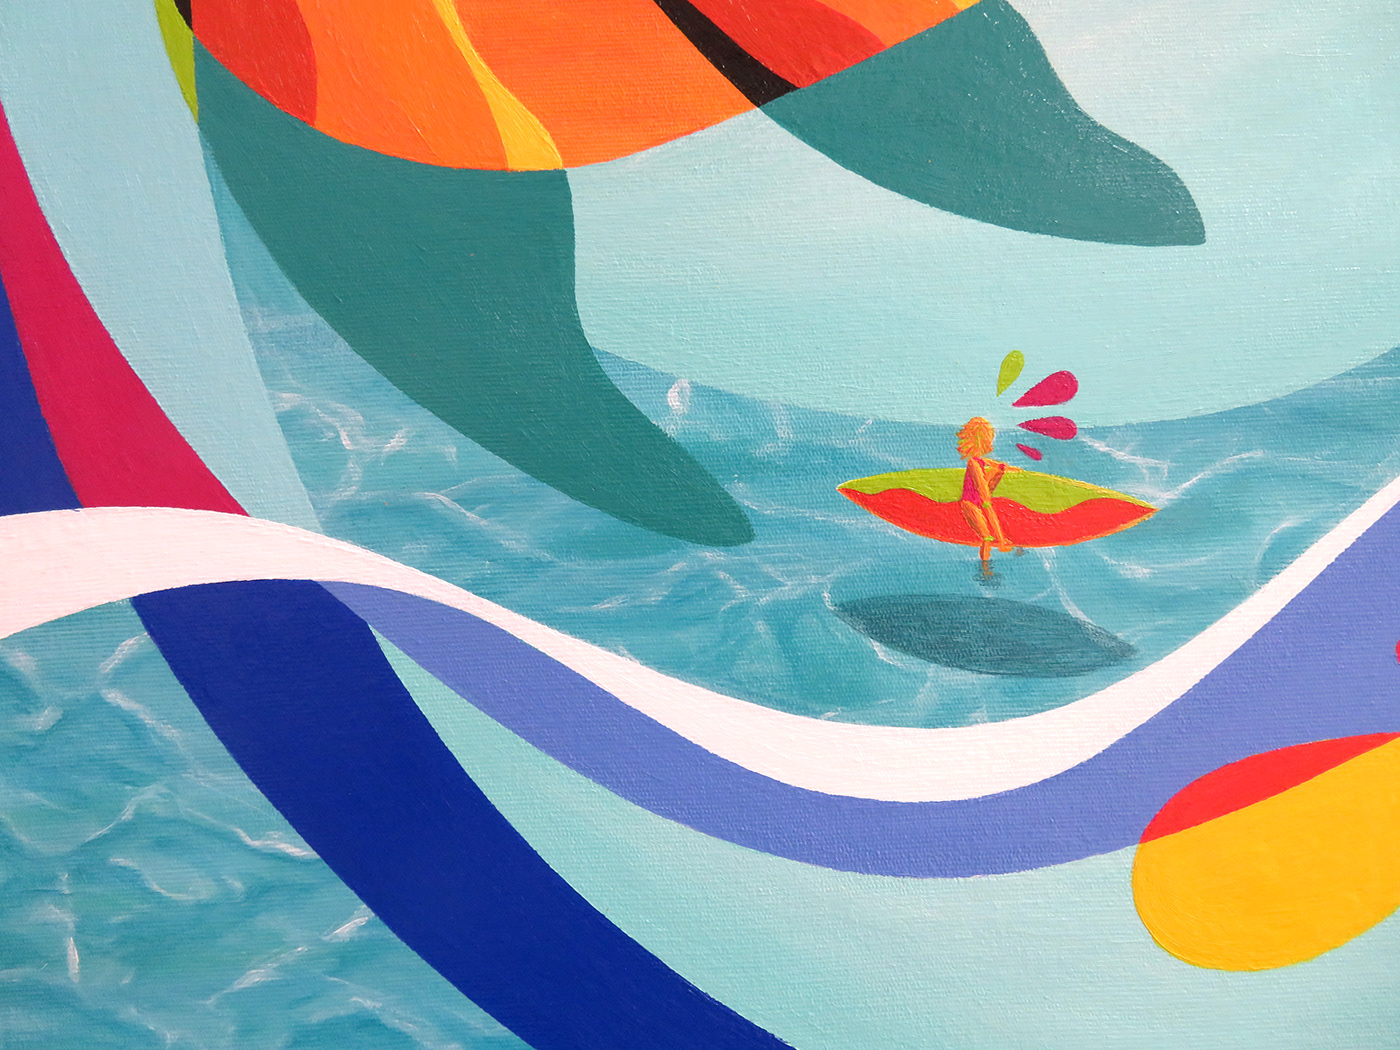 acrylic painting colors Digital Art  ILLUSTRATION  beach Surf havaianas kidlit new yorker Washington Post